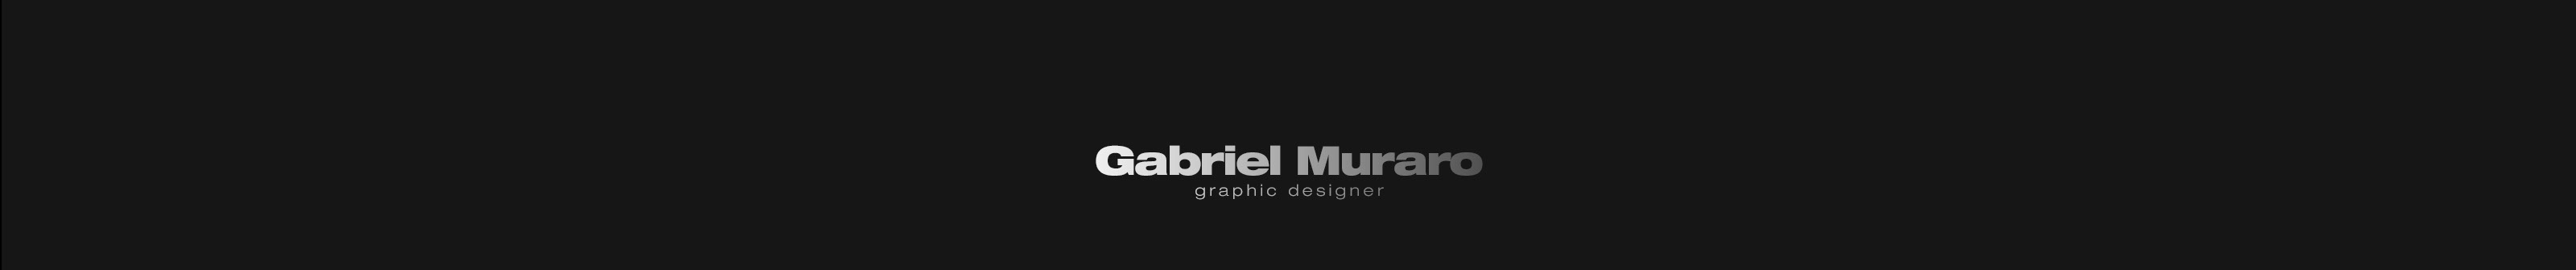 Bannière de profil de Gabriel Muraro